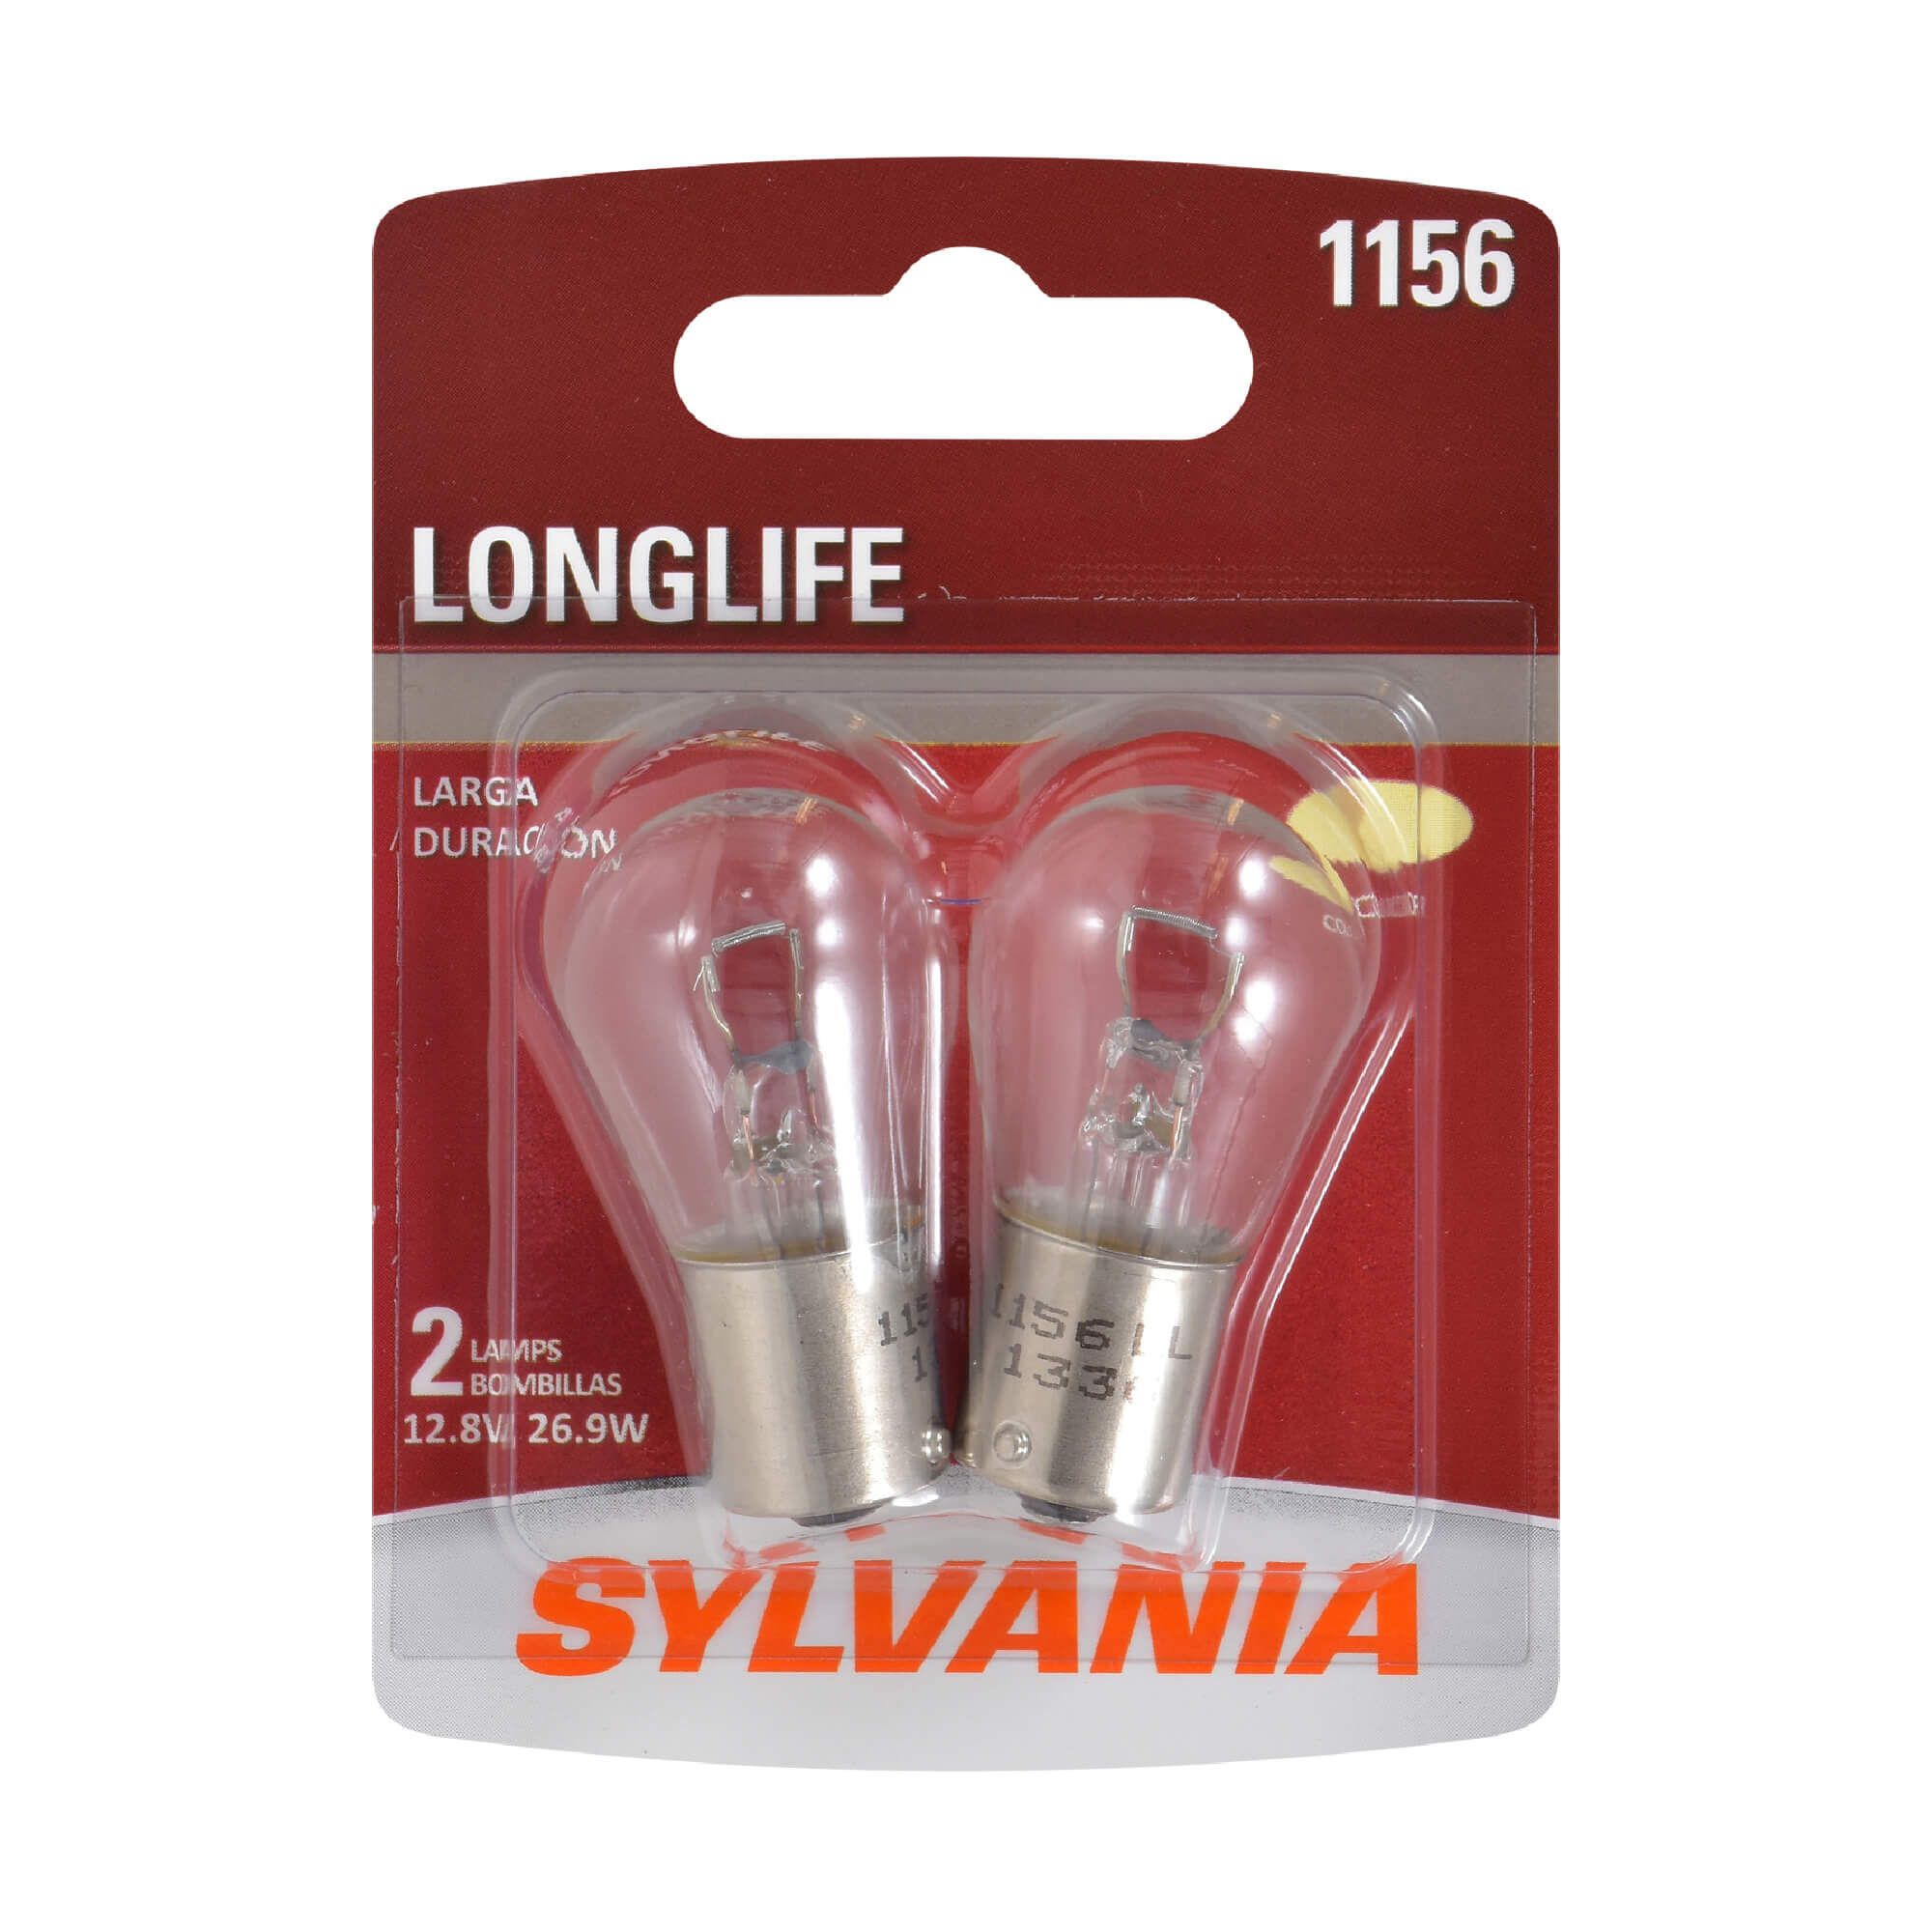 SYLVANIA 1156 Long Life Mini Bulb, 2 Pack